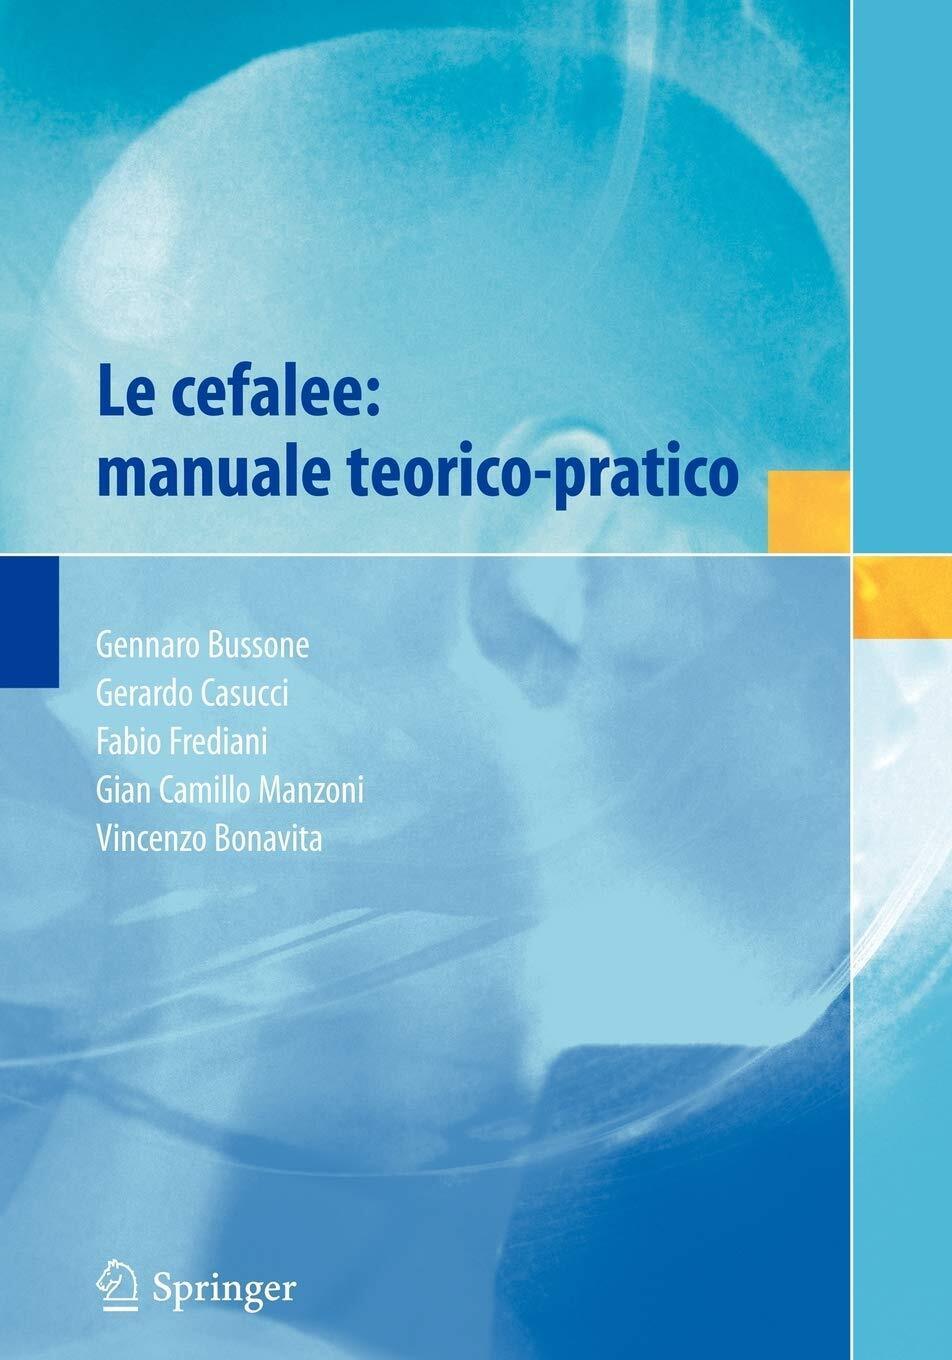 Le cefalee: manuale teorico-pratico - G. Bussone, G. Casucci - Springer, 2007